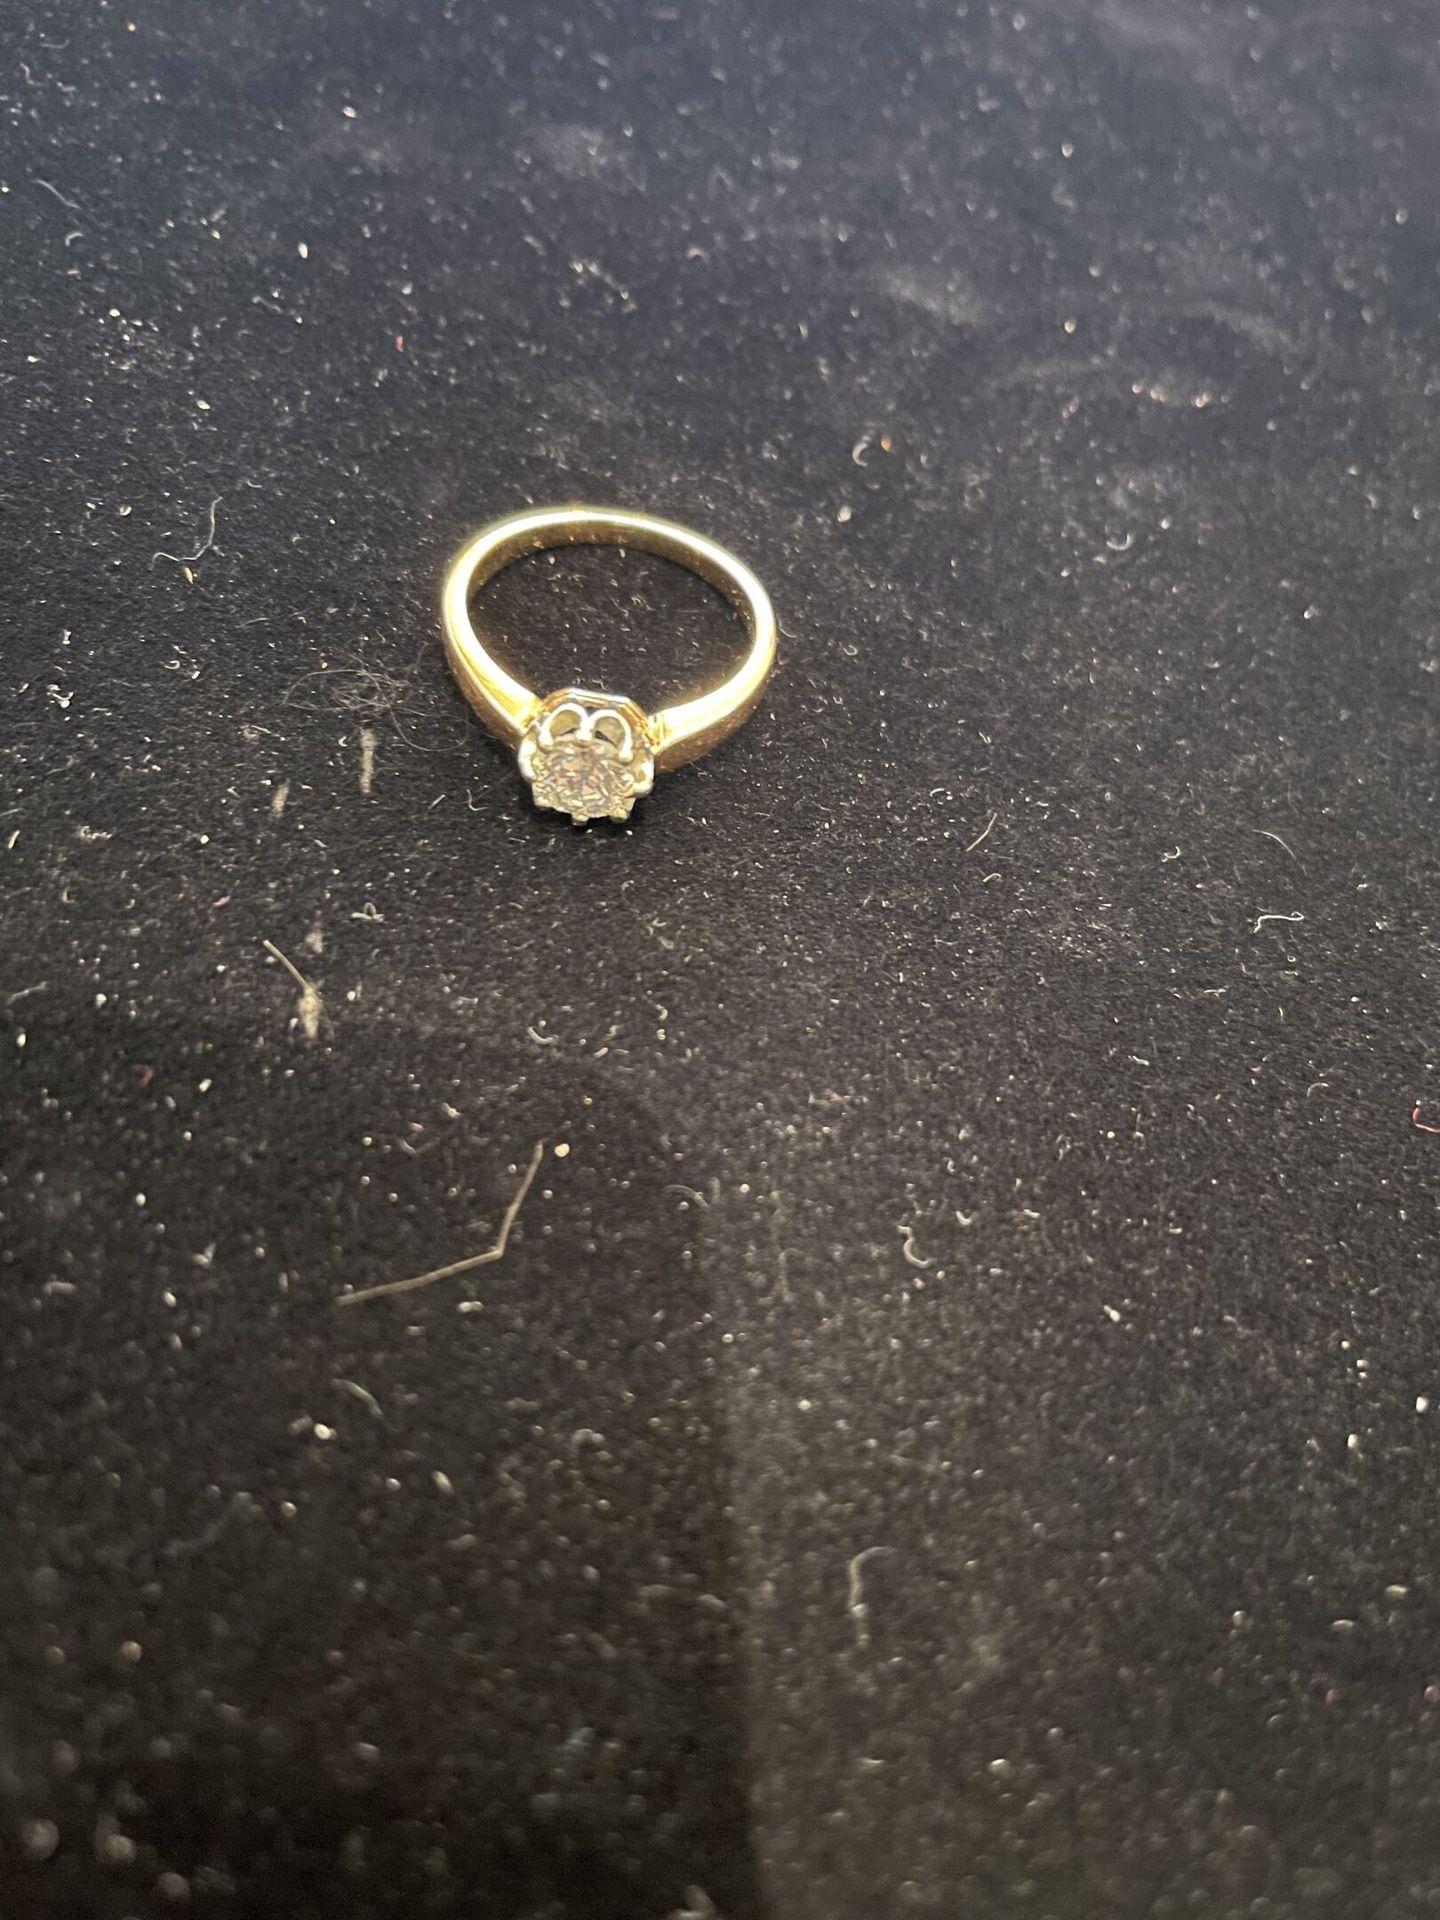 Null 18K(750°/°)黄金戒指，镶有半截式钻石（约0.5克拉）。

意外，将被重新切割。

毛重：28.2克。